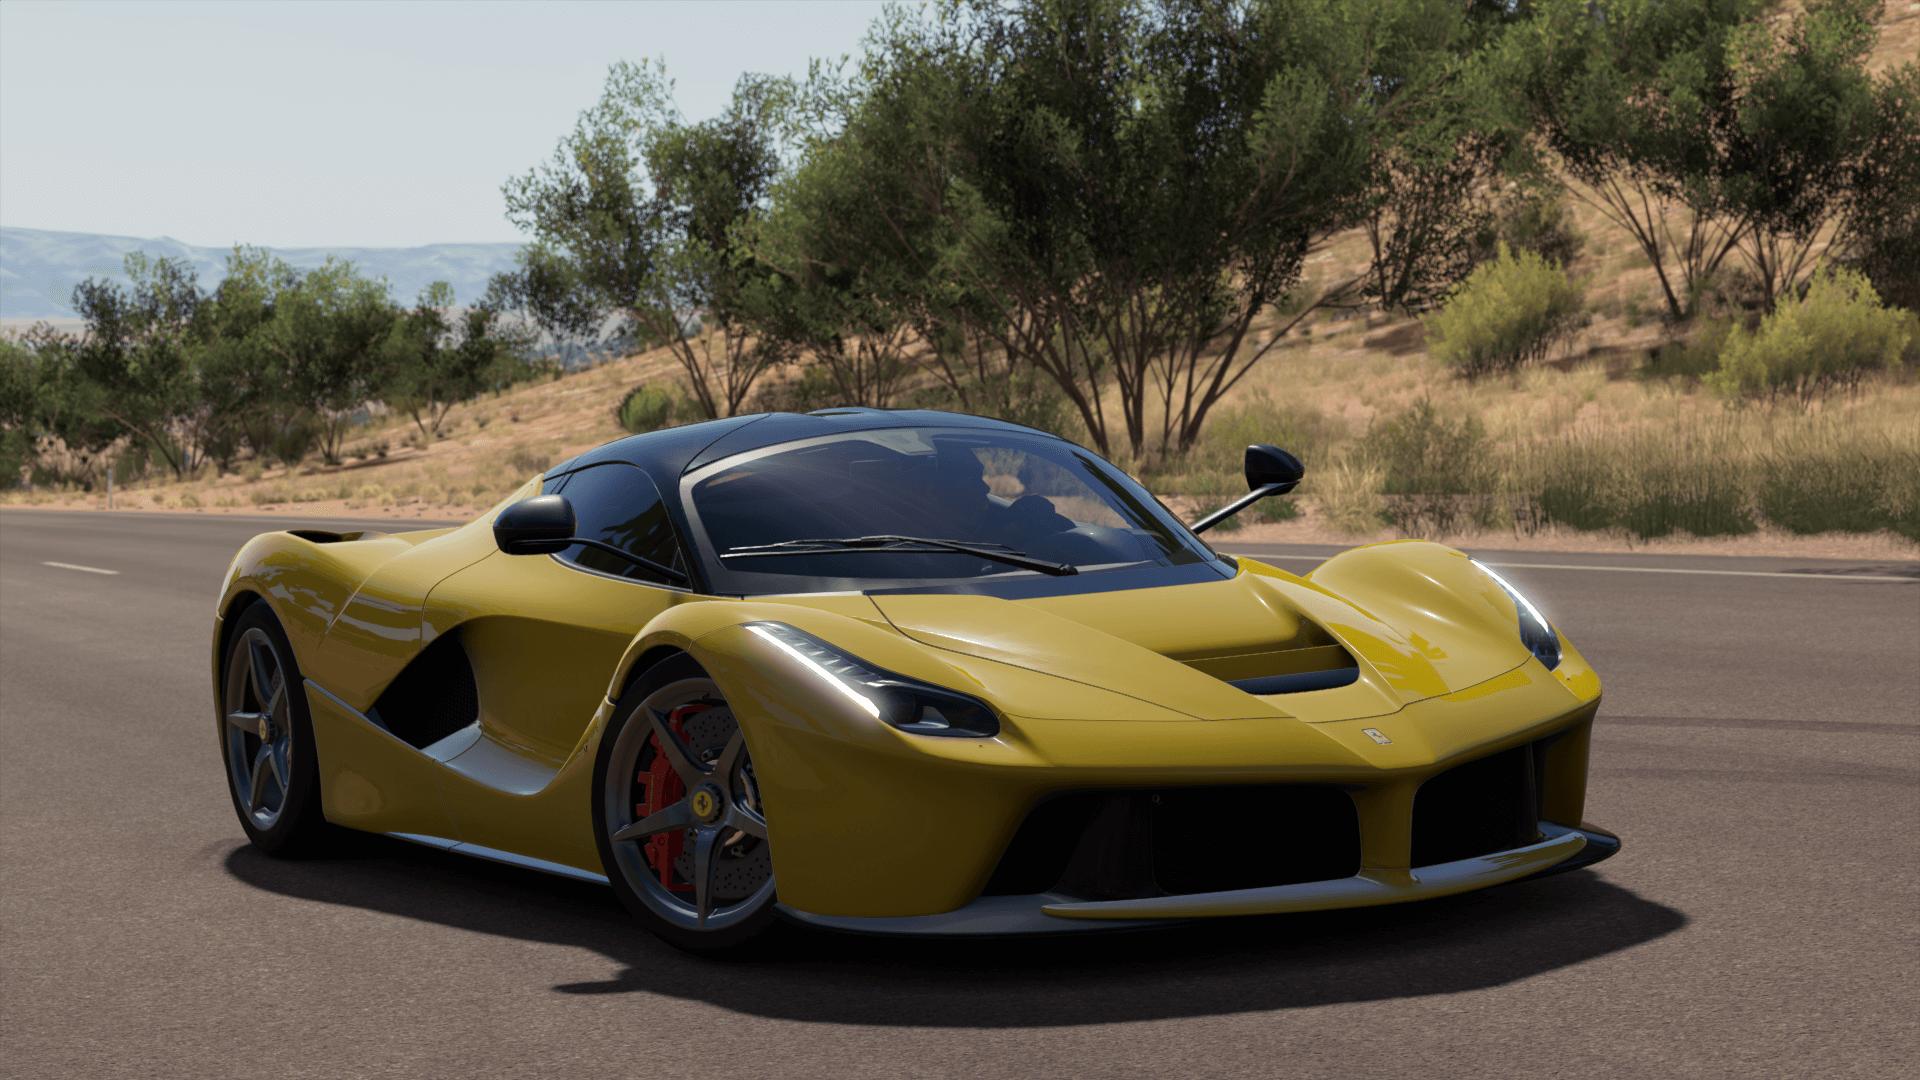 Gamescom 2016 brings us more Forza Horizon 3 screenshots